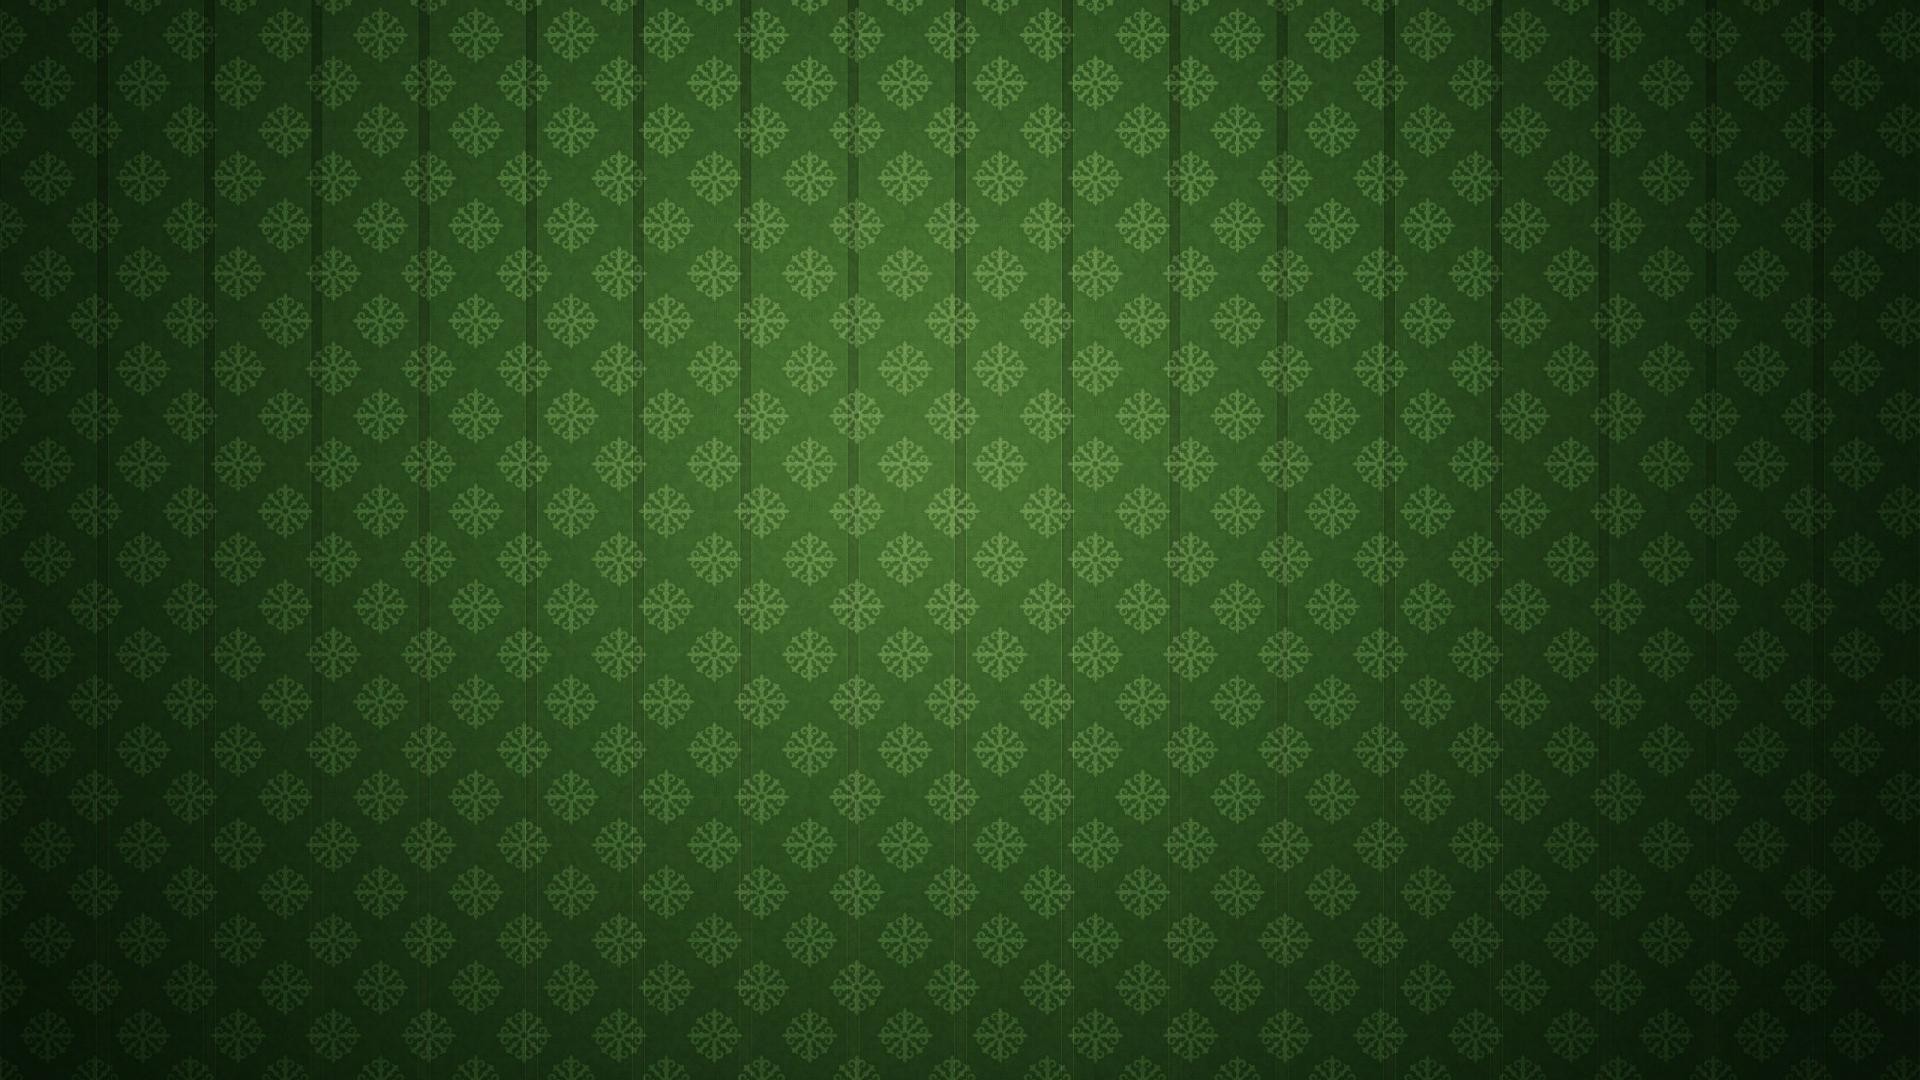 1920x1080  Cool Green stripes hd desktop backgrounds wide wallpapers:1280x800,1440x900,1680x1050  -